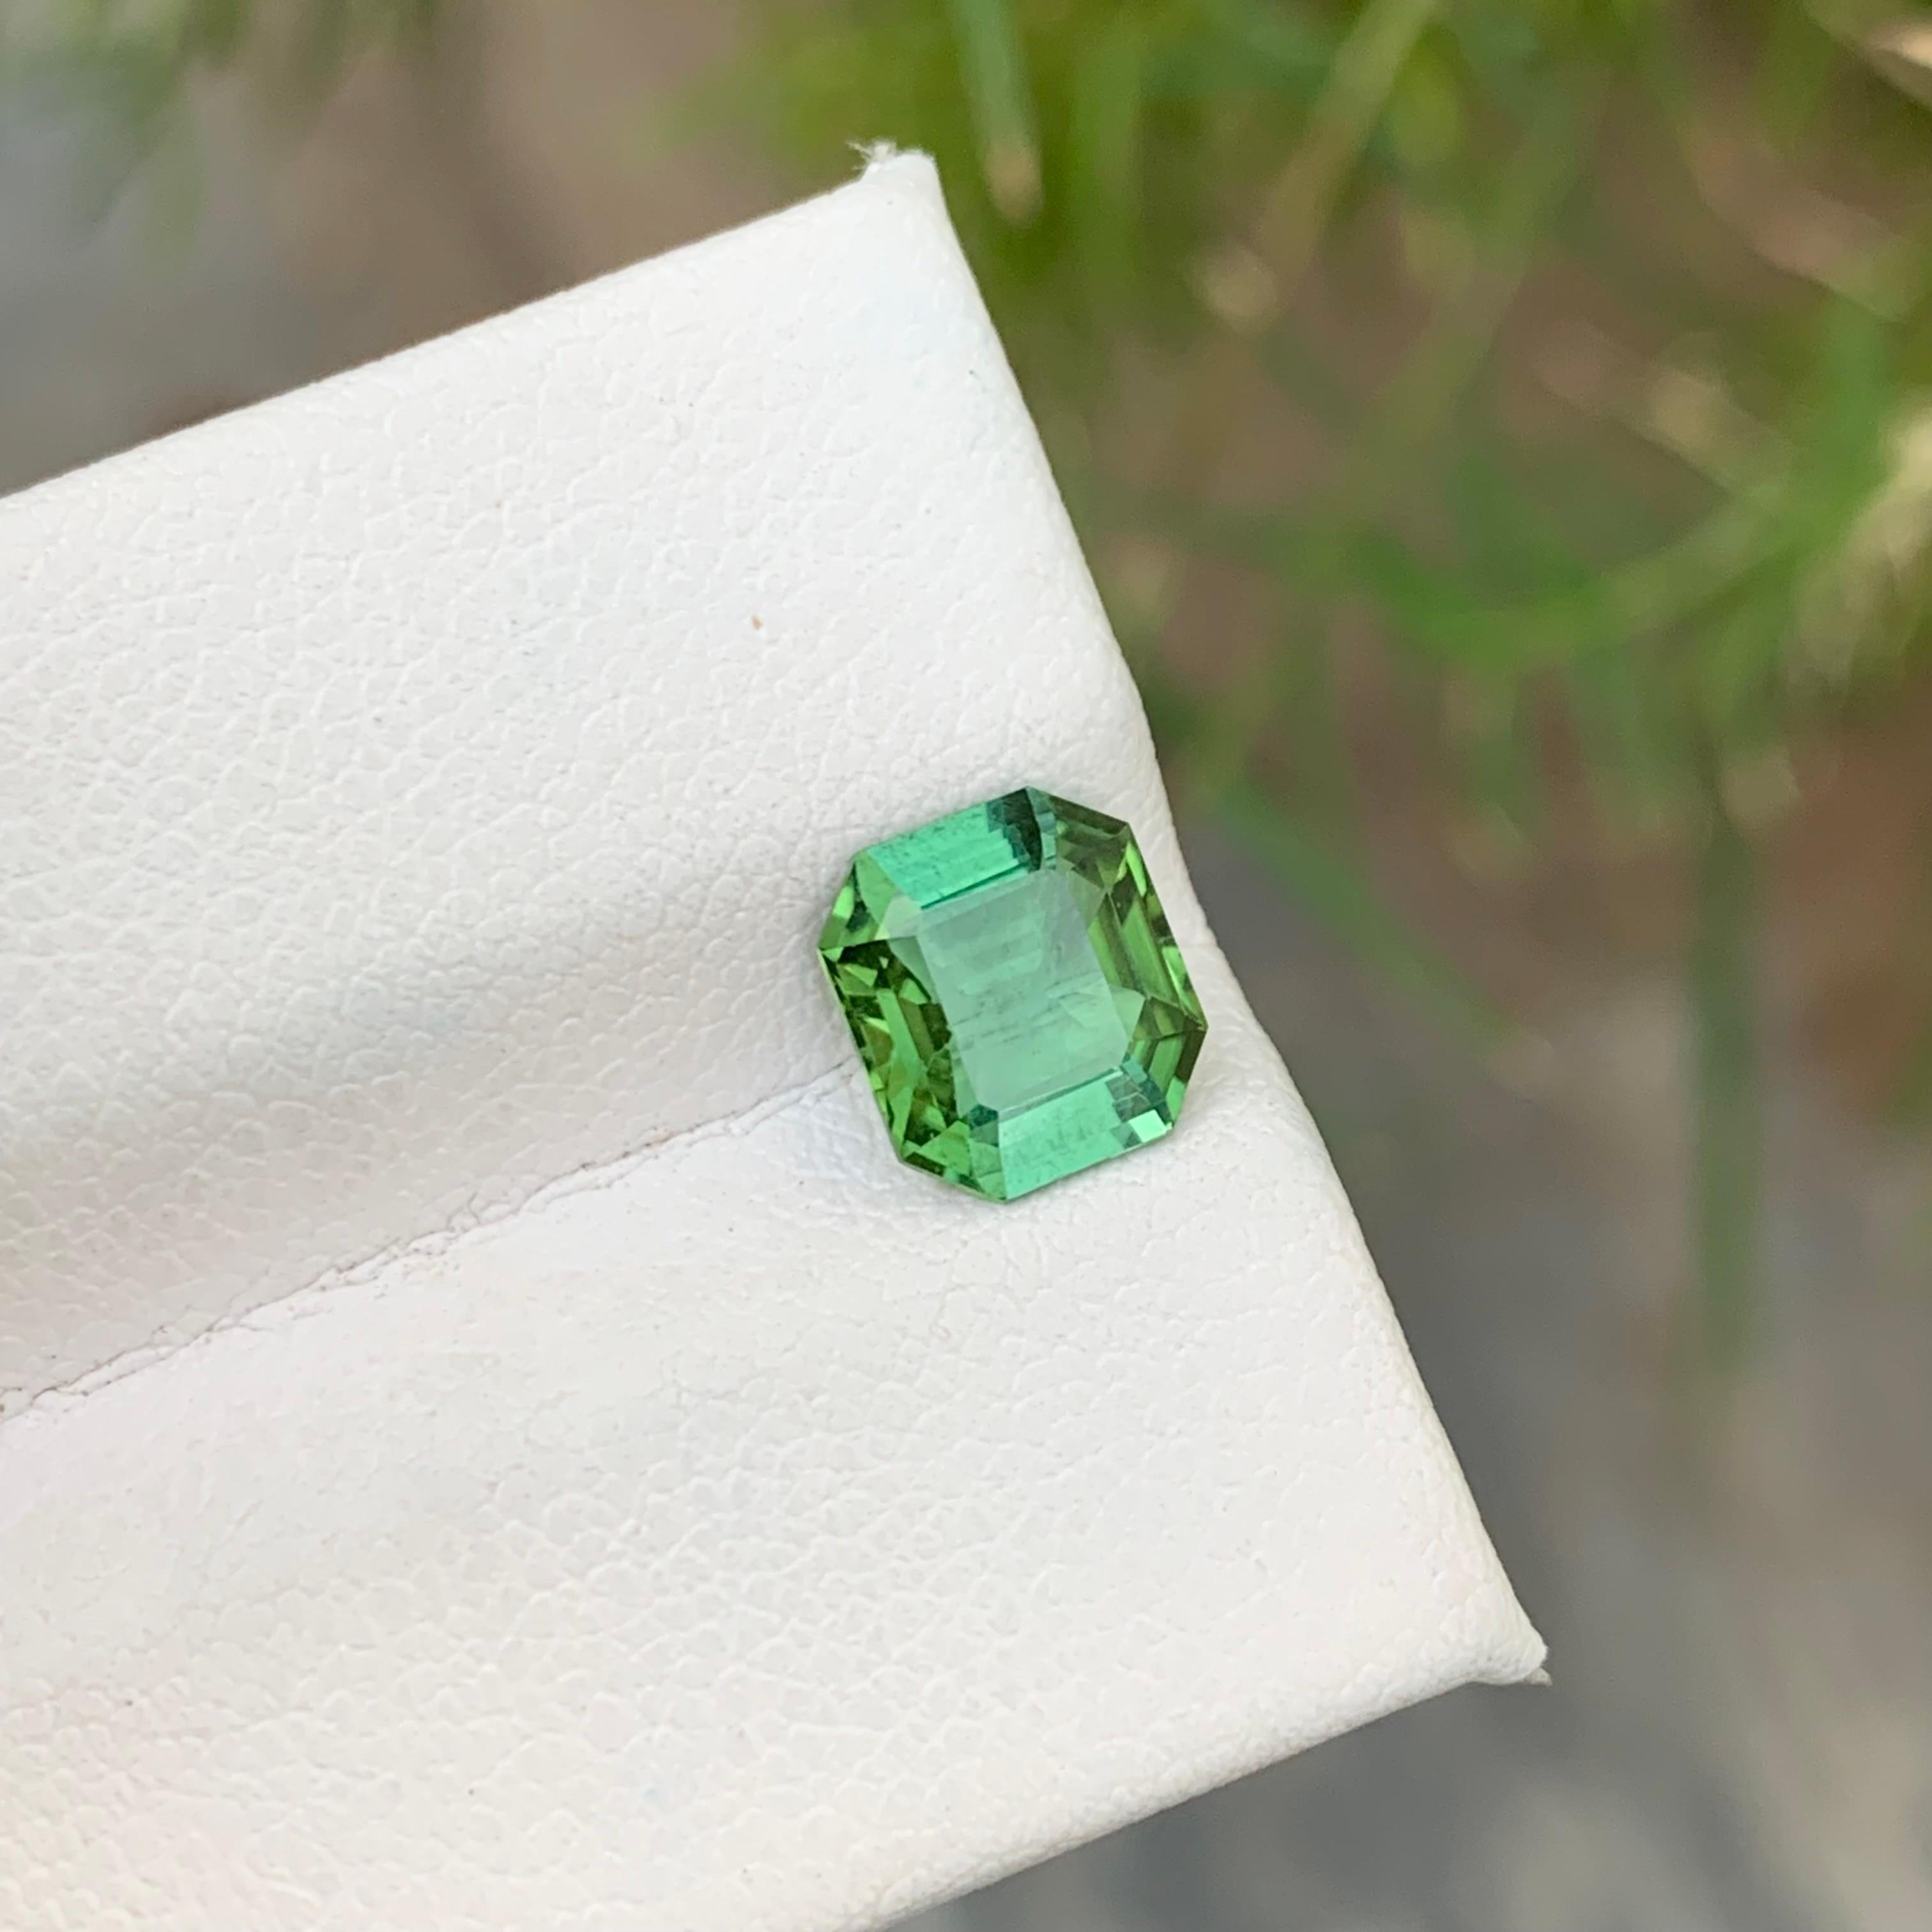 Gorgeous 1.65 Carat Mint Green Tourmaline Emerald Cut Ring Gem from Afghanistan 5